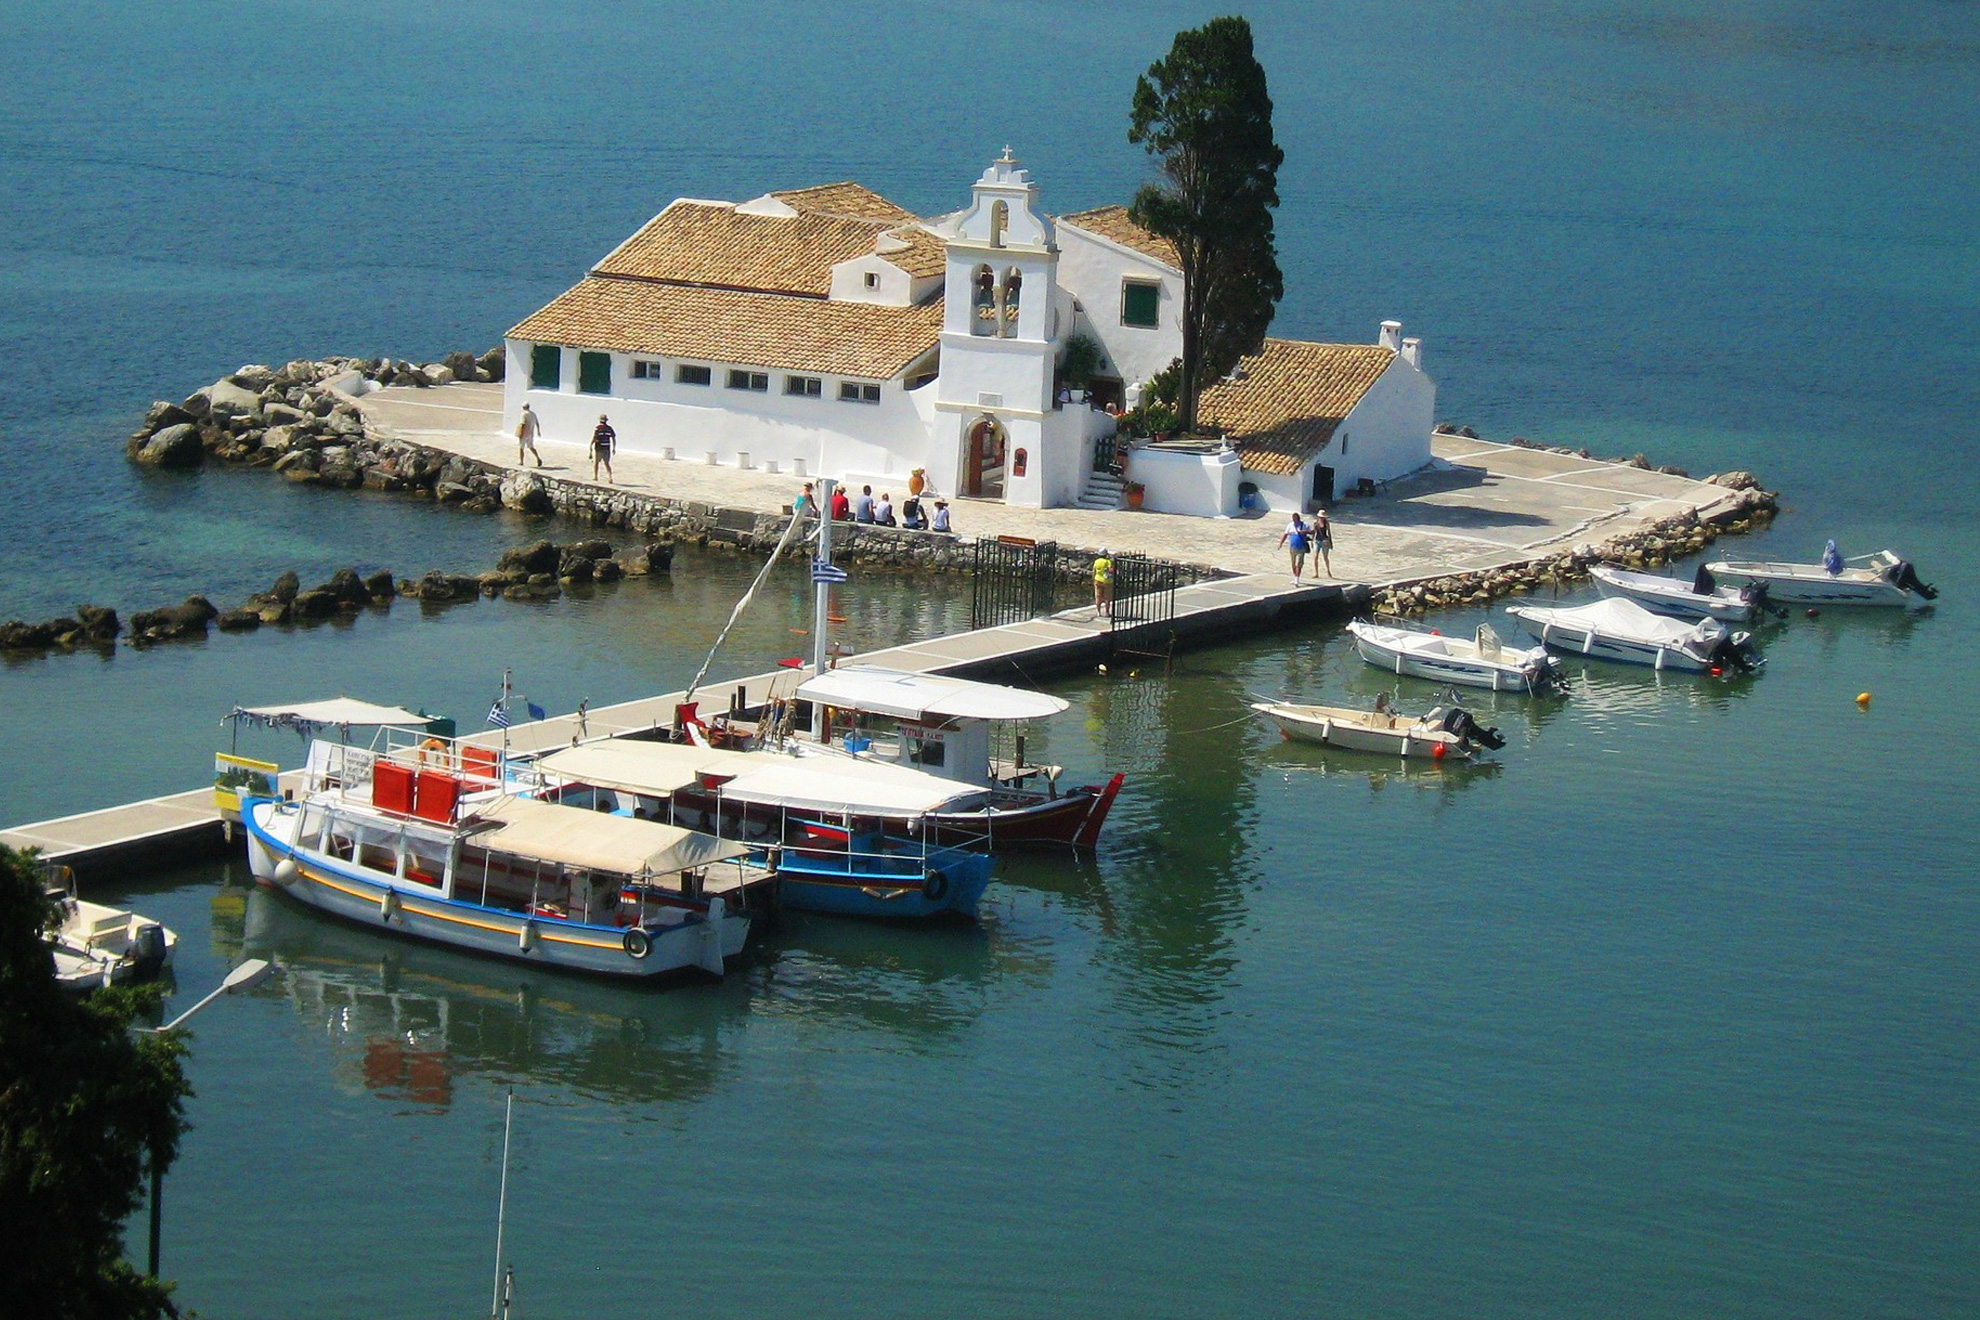 Великден на остров Корфу, хотел Messonghi Beach 3+* - Манастира &bdquo;Богородица Влахерна&ldquo;, Корфу, Гърция - Vlacherna Monastery, Corfu, Greece